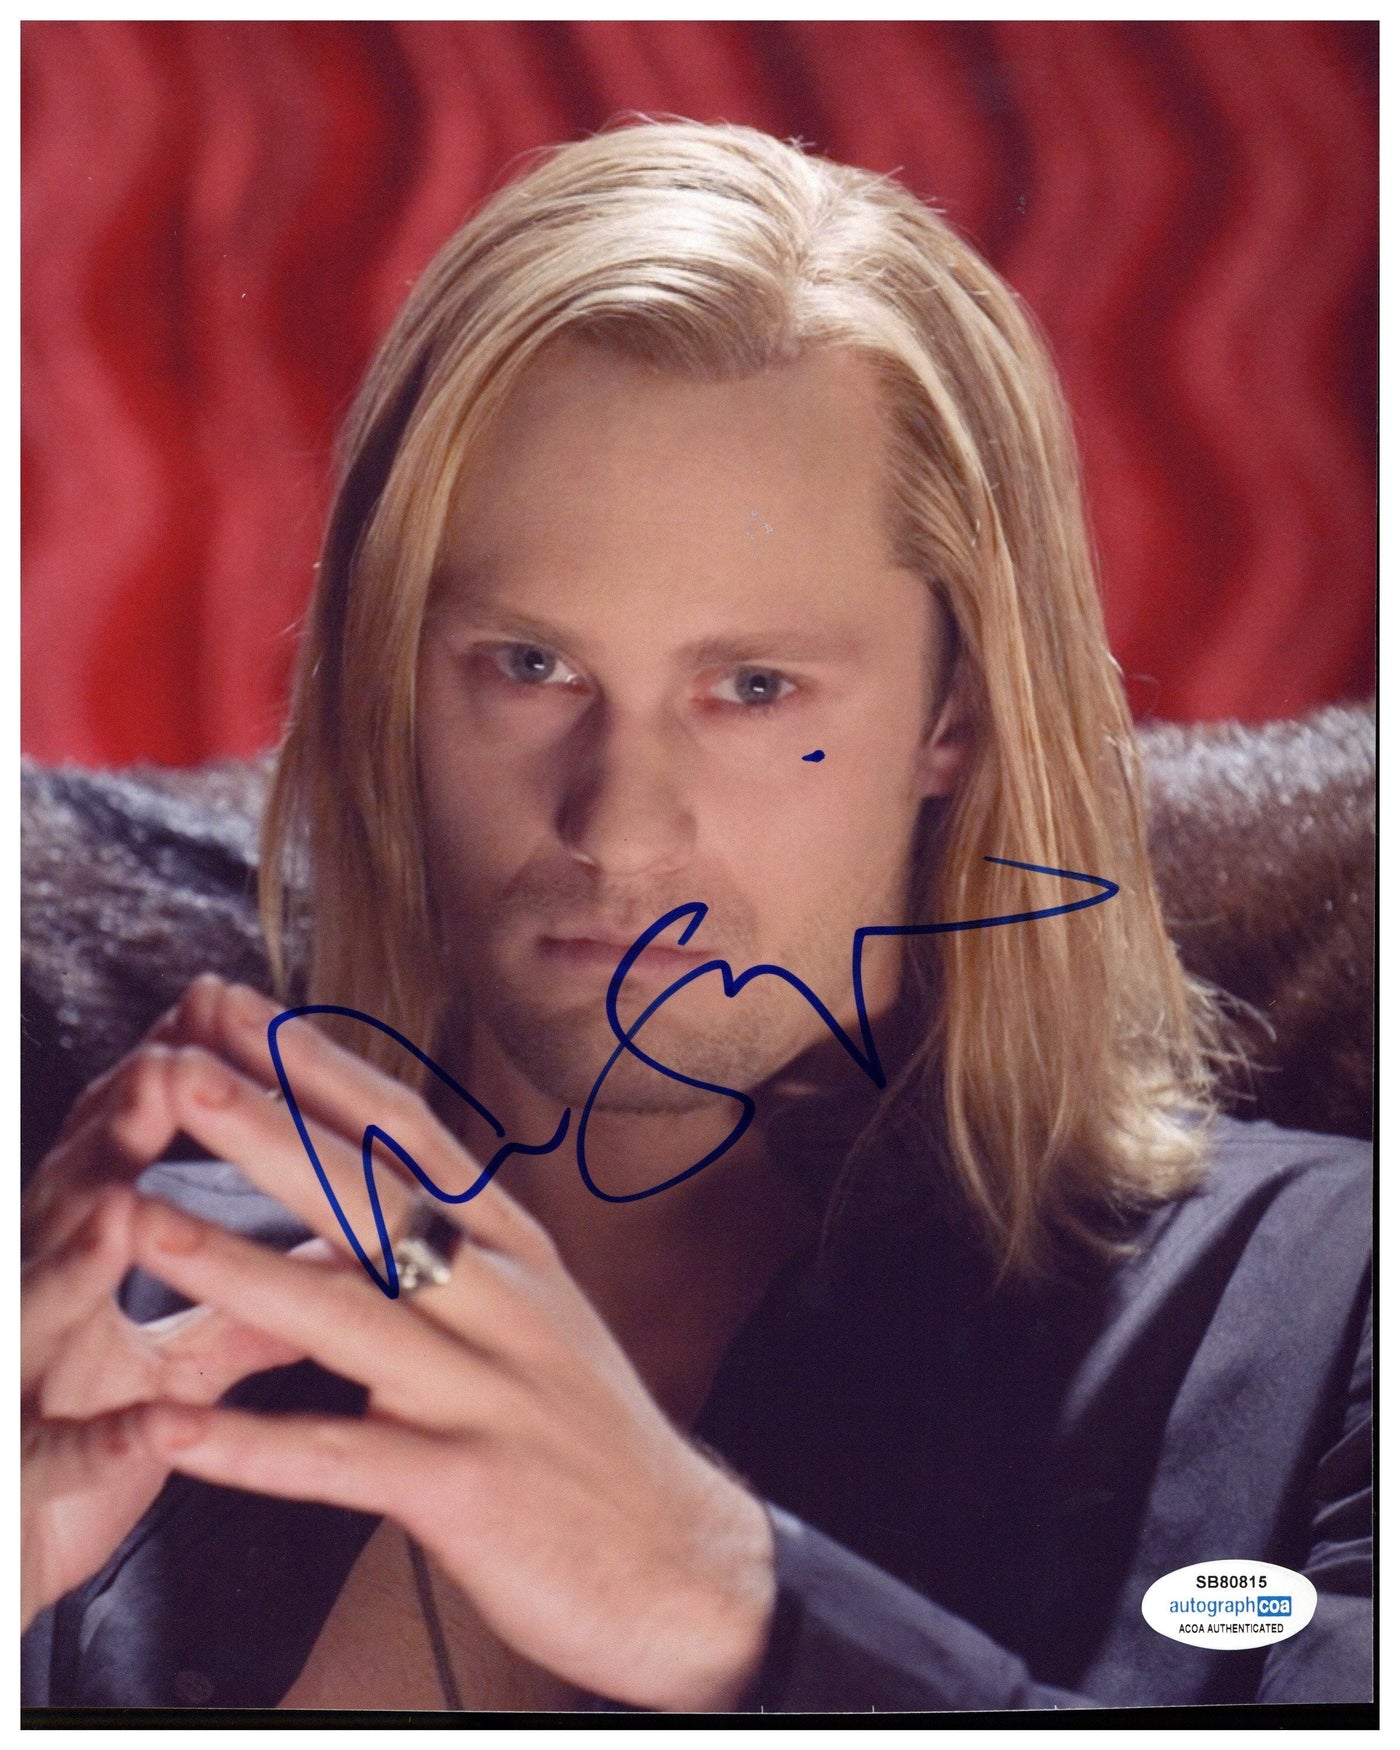 Alexander Skarsgård Signed 8x10 Photo TRUE BLOOD Autographed AutographCOA 2